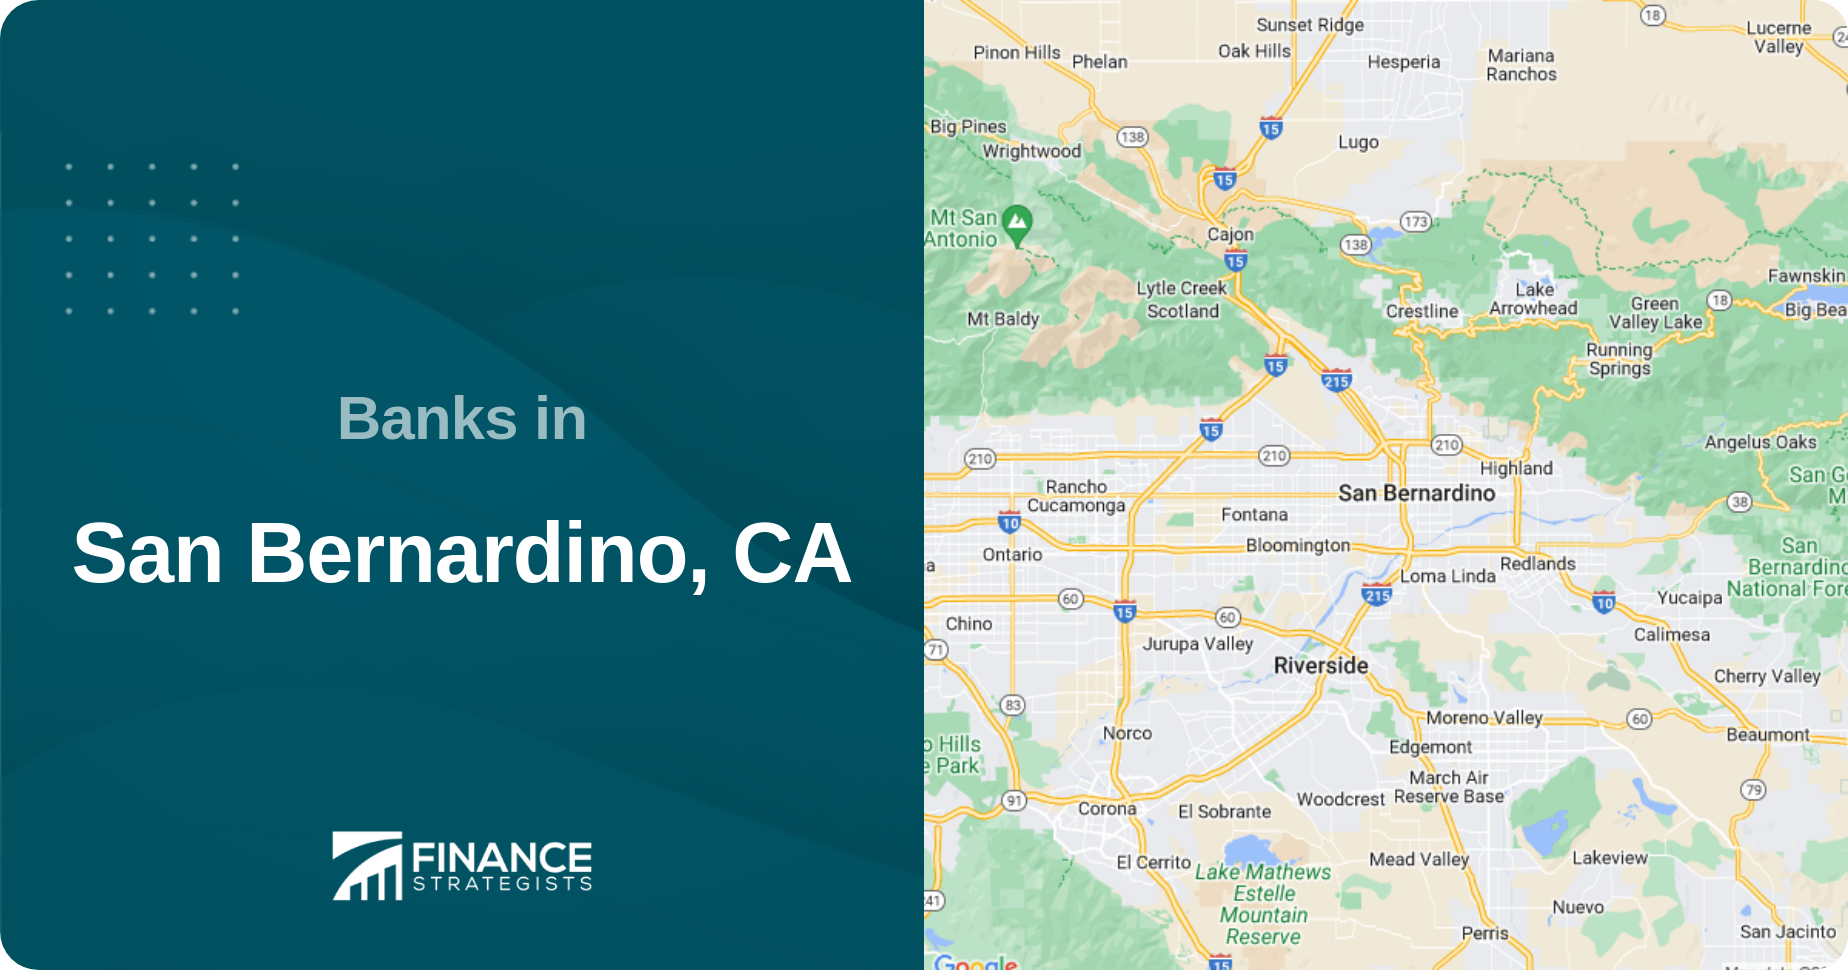 Banks in San Bernardino, CA